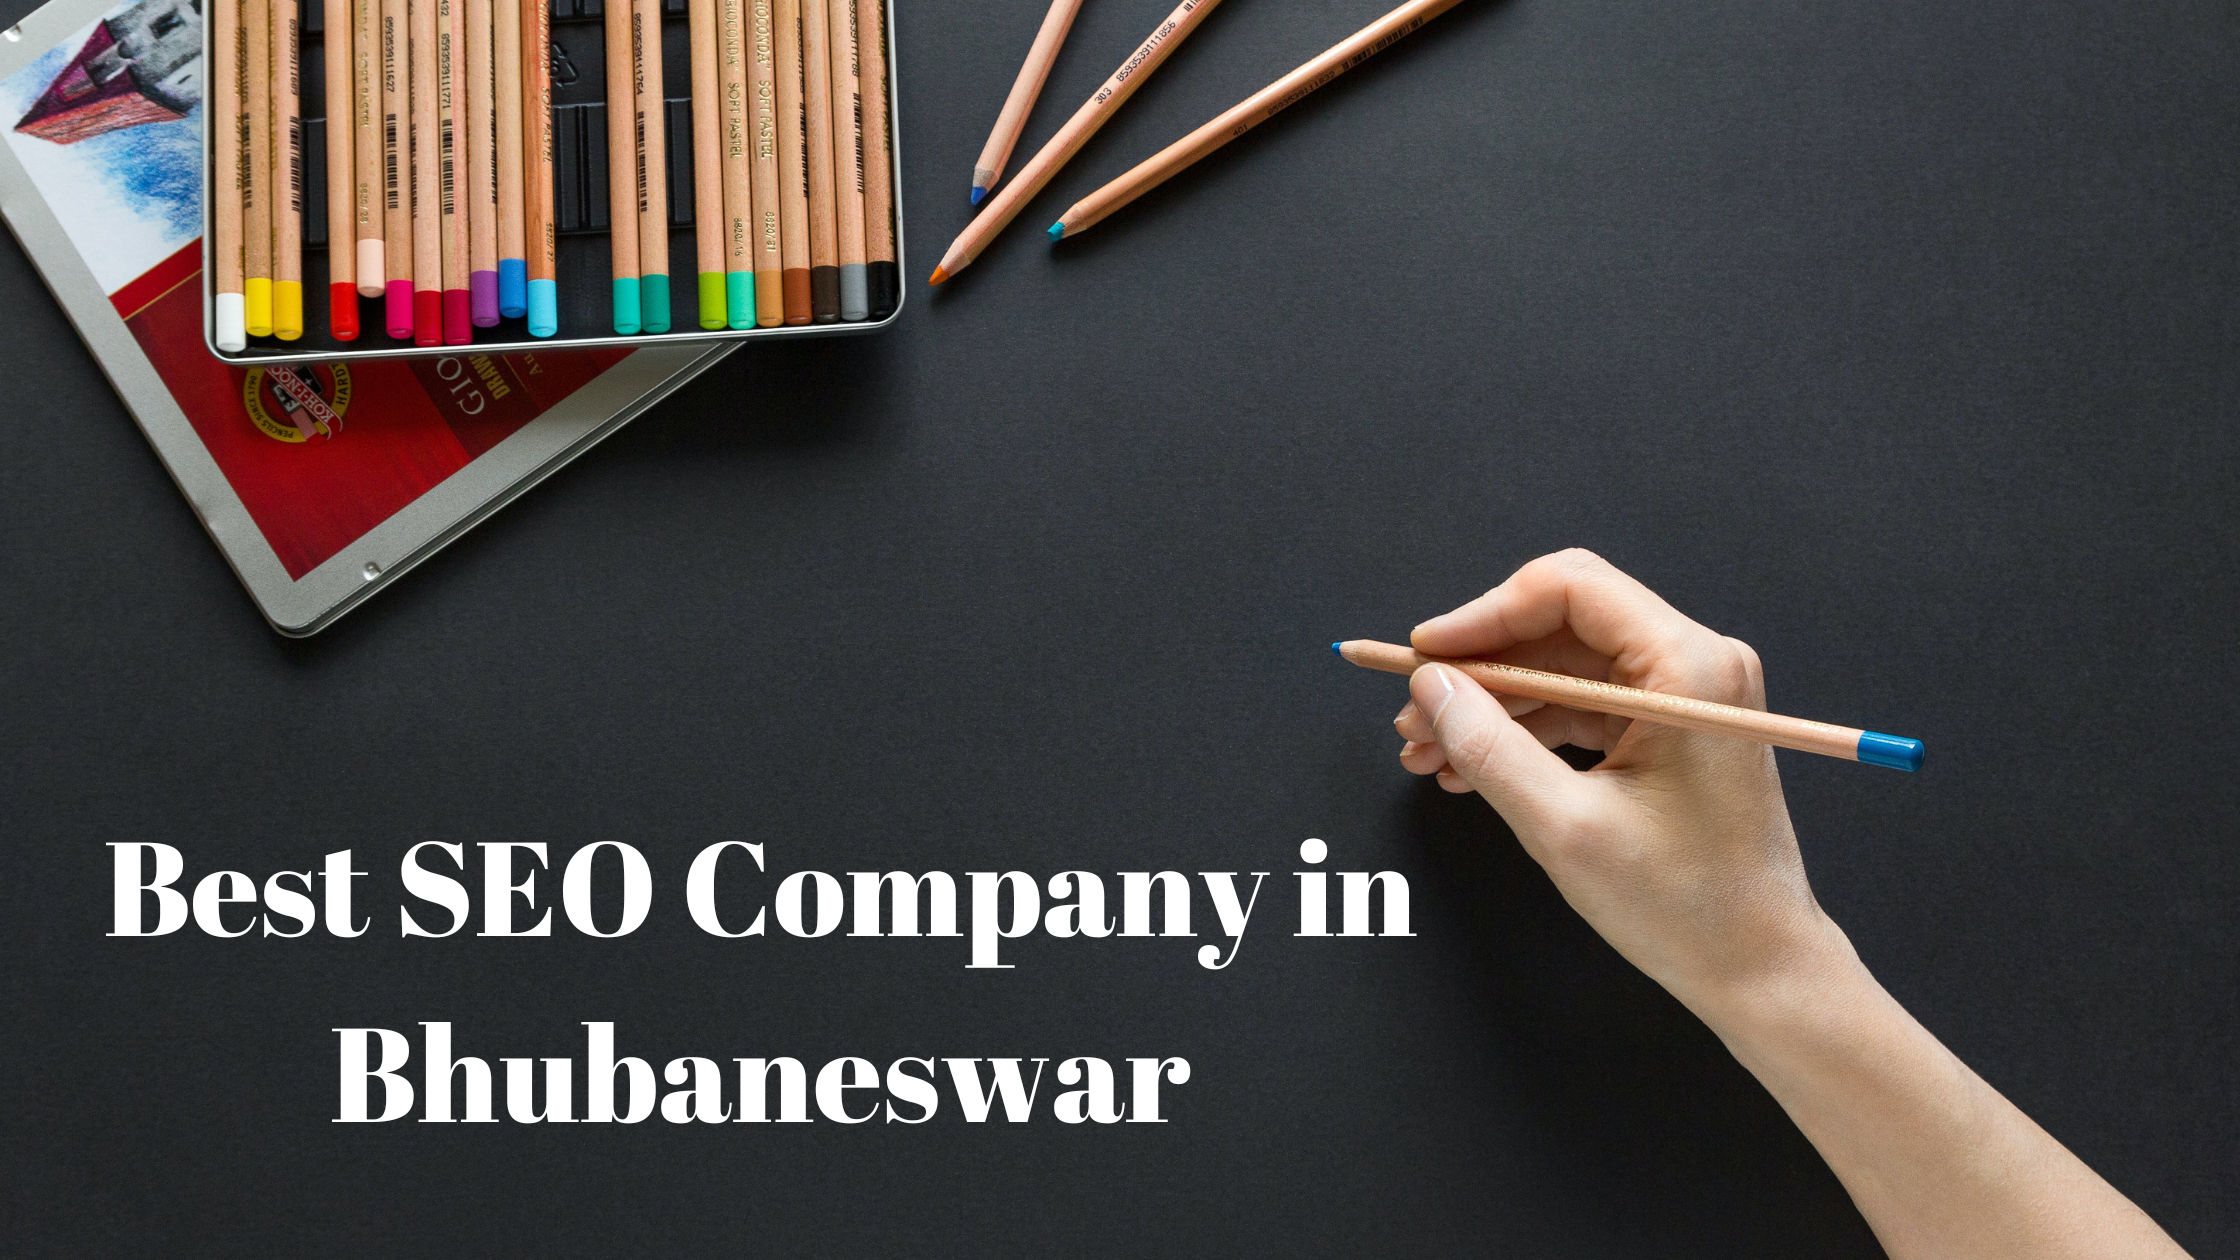 SEO Company in Bhubaneswar